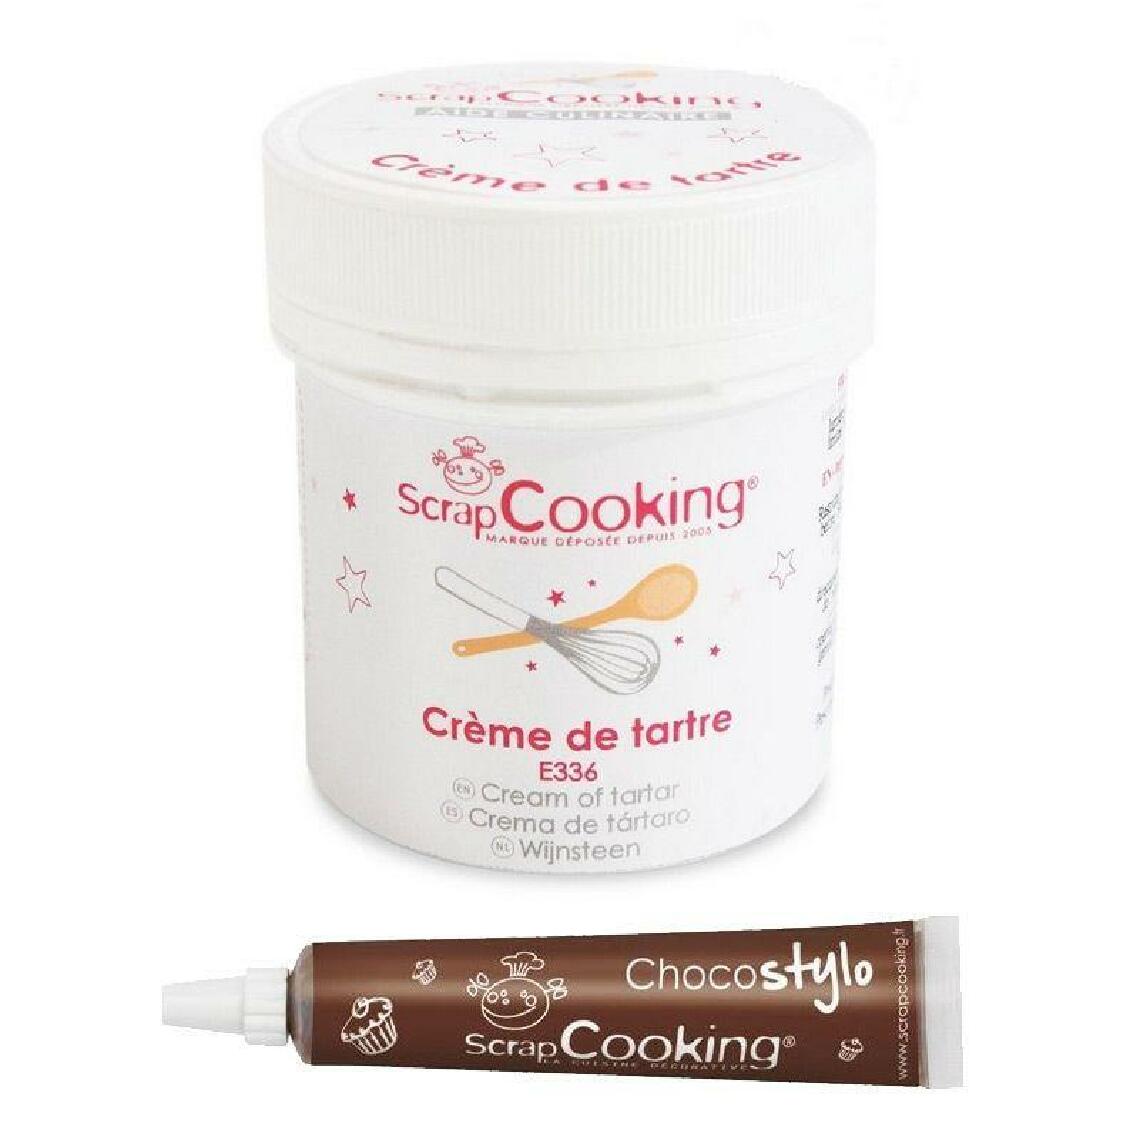 Scrapcooking - Crème de tartre + Stylo chocolat - Kits créatifs